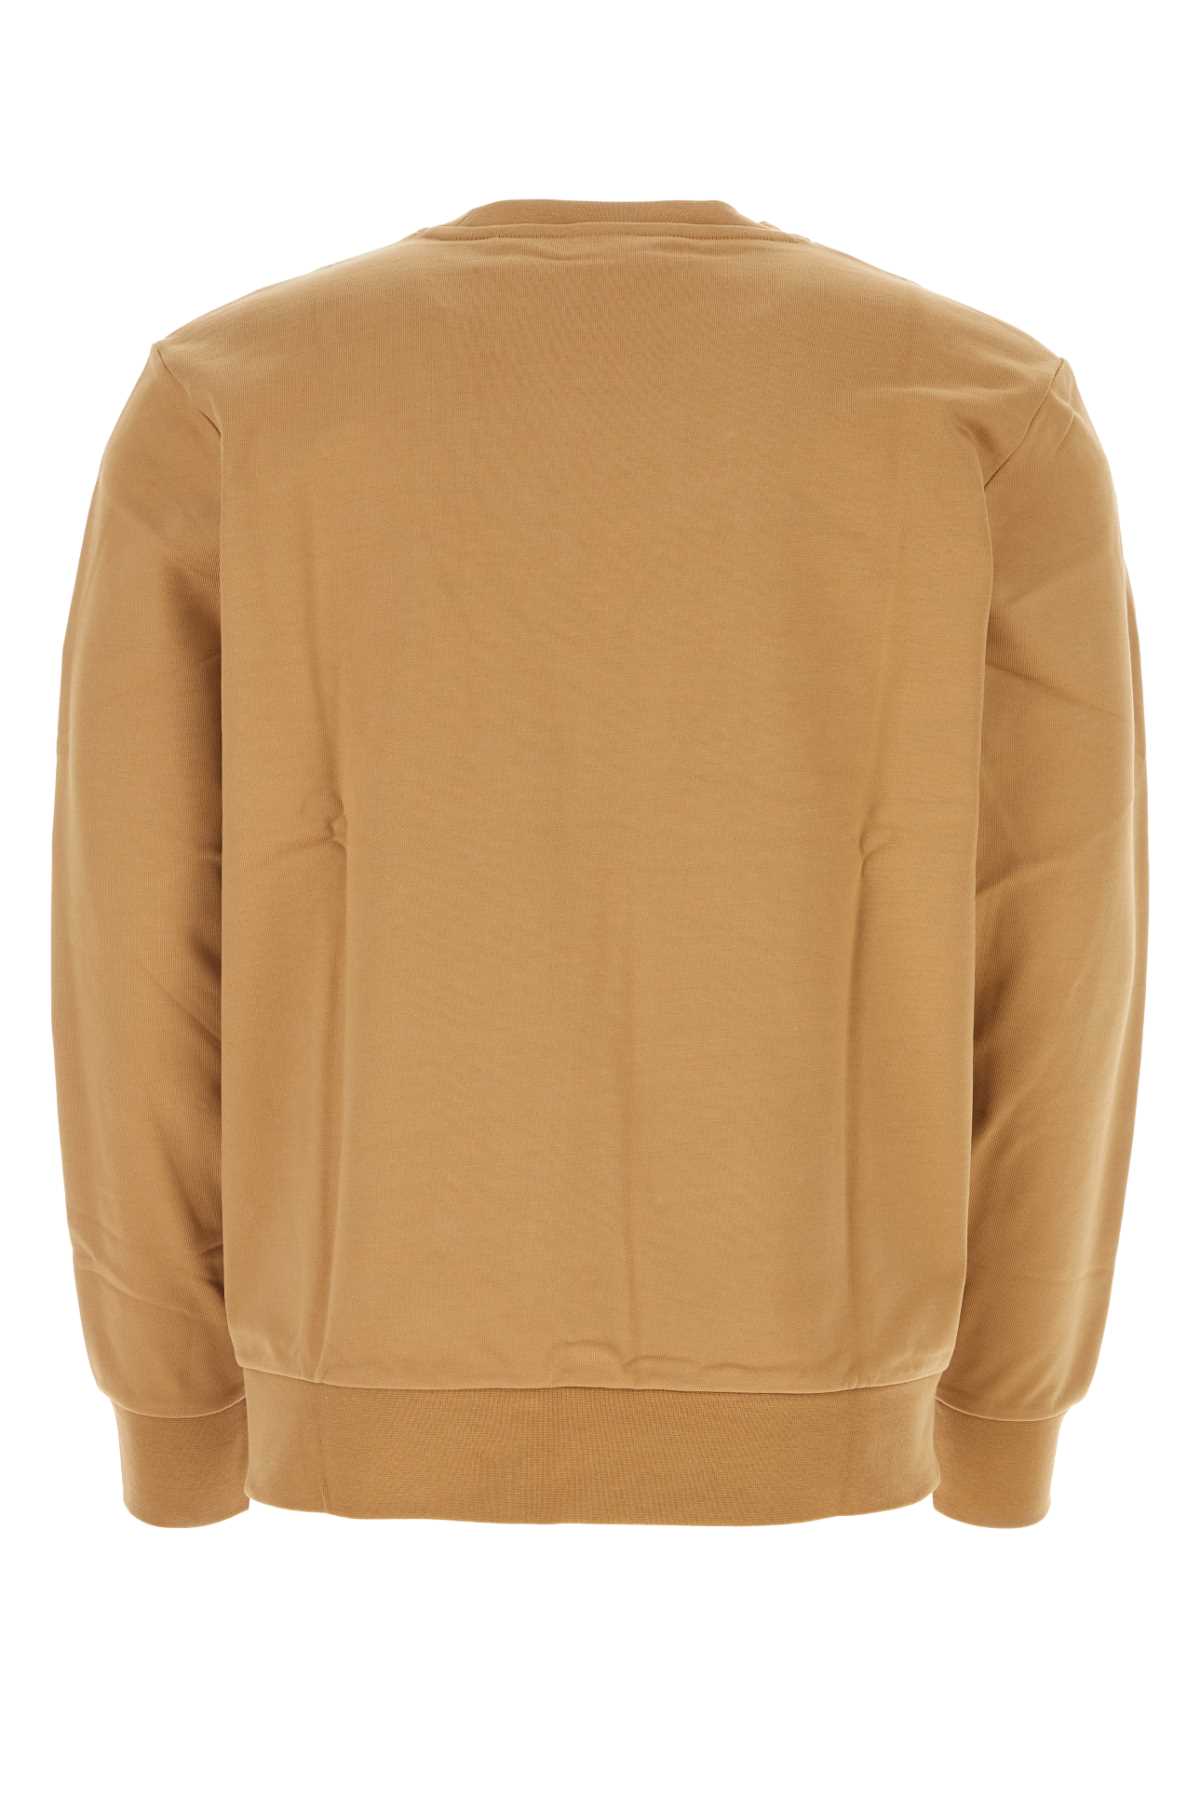 Hugo Boss Camel Cotton Sweatshirt In Mediumbeige